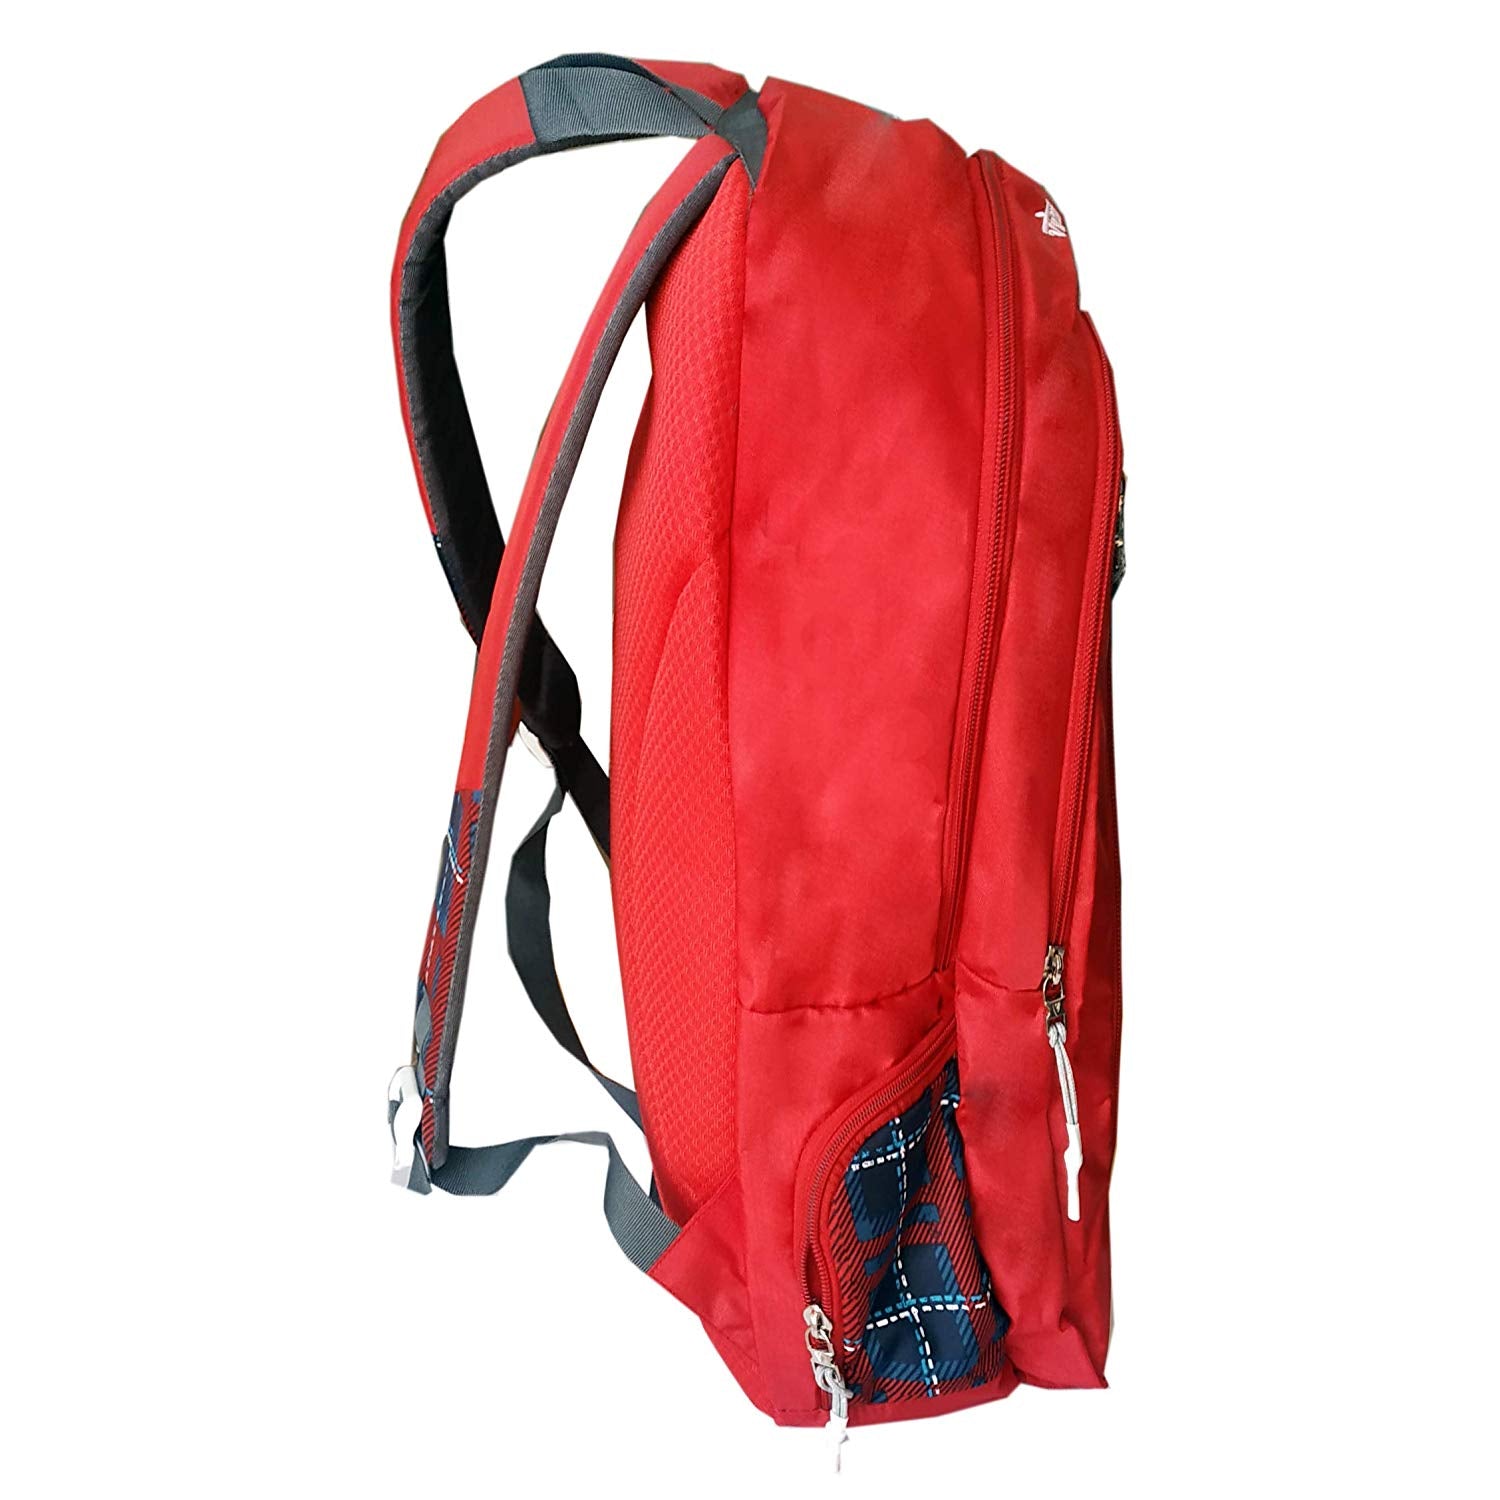 Prokick 30 Ltrs Lite Weight Waterproof Casual Backpack | School Bag, Red - Best Price online Prokicksports.com